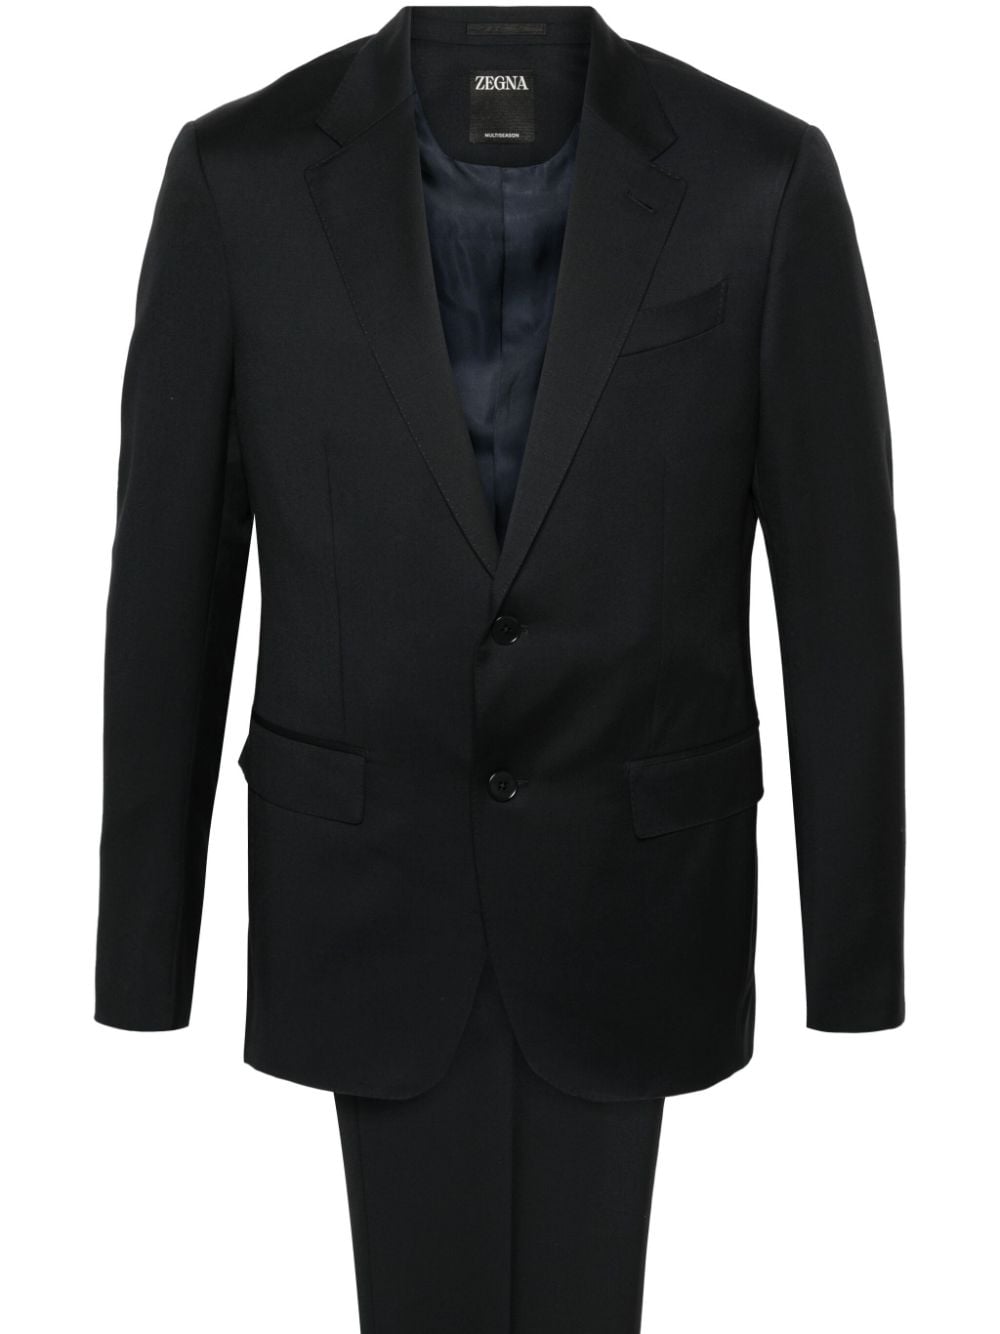 Zegna single-breasted wool suit - Black von Zegna